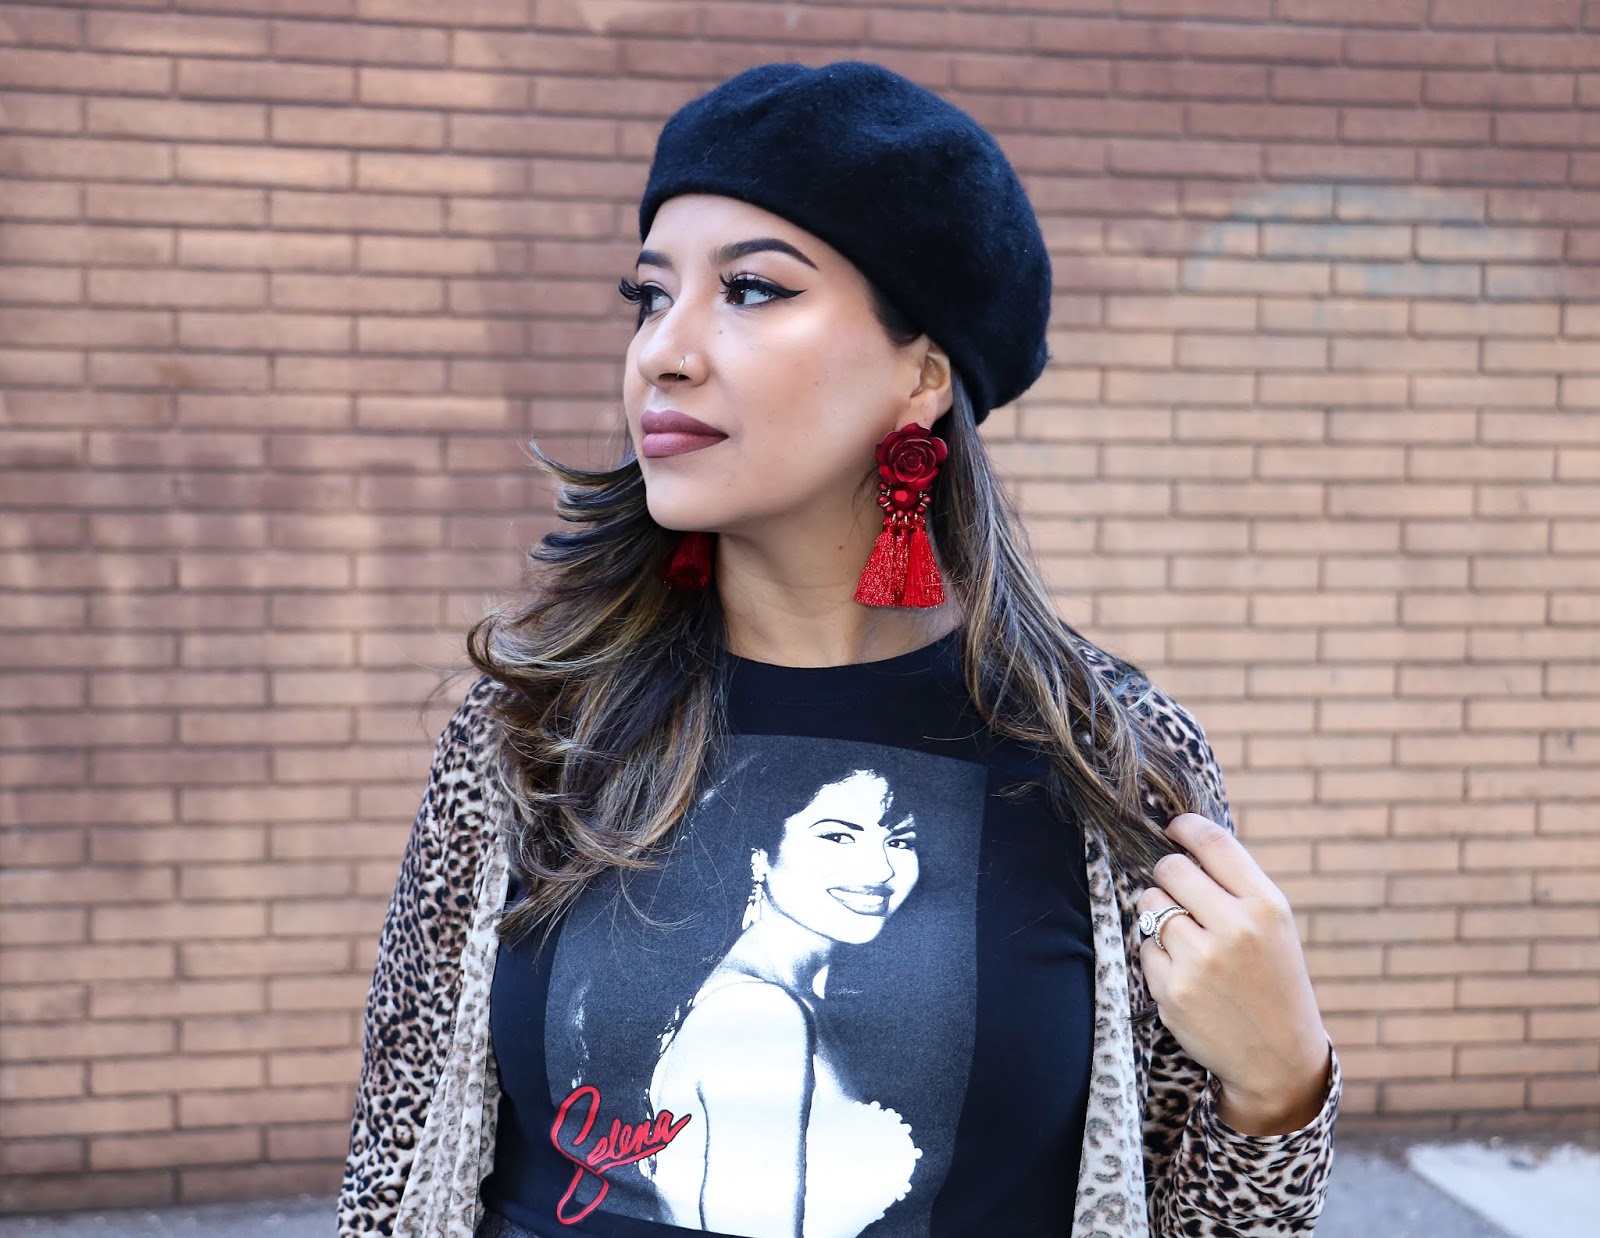 Simple Makeup Selena Quintanilla Top Leopard Cardigan with Red Rose Tassel Earrings Black Beret